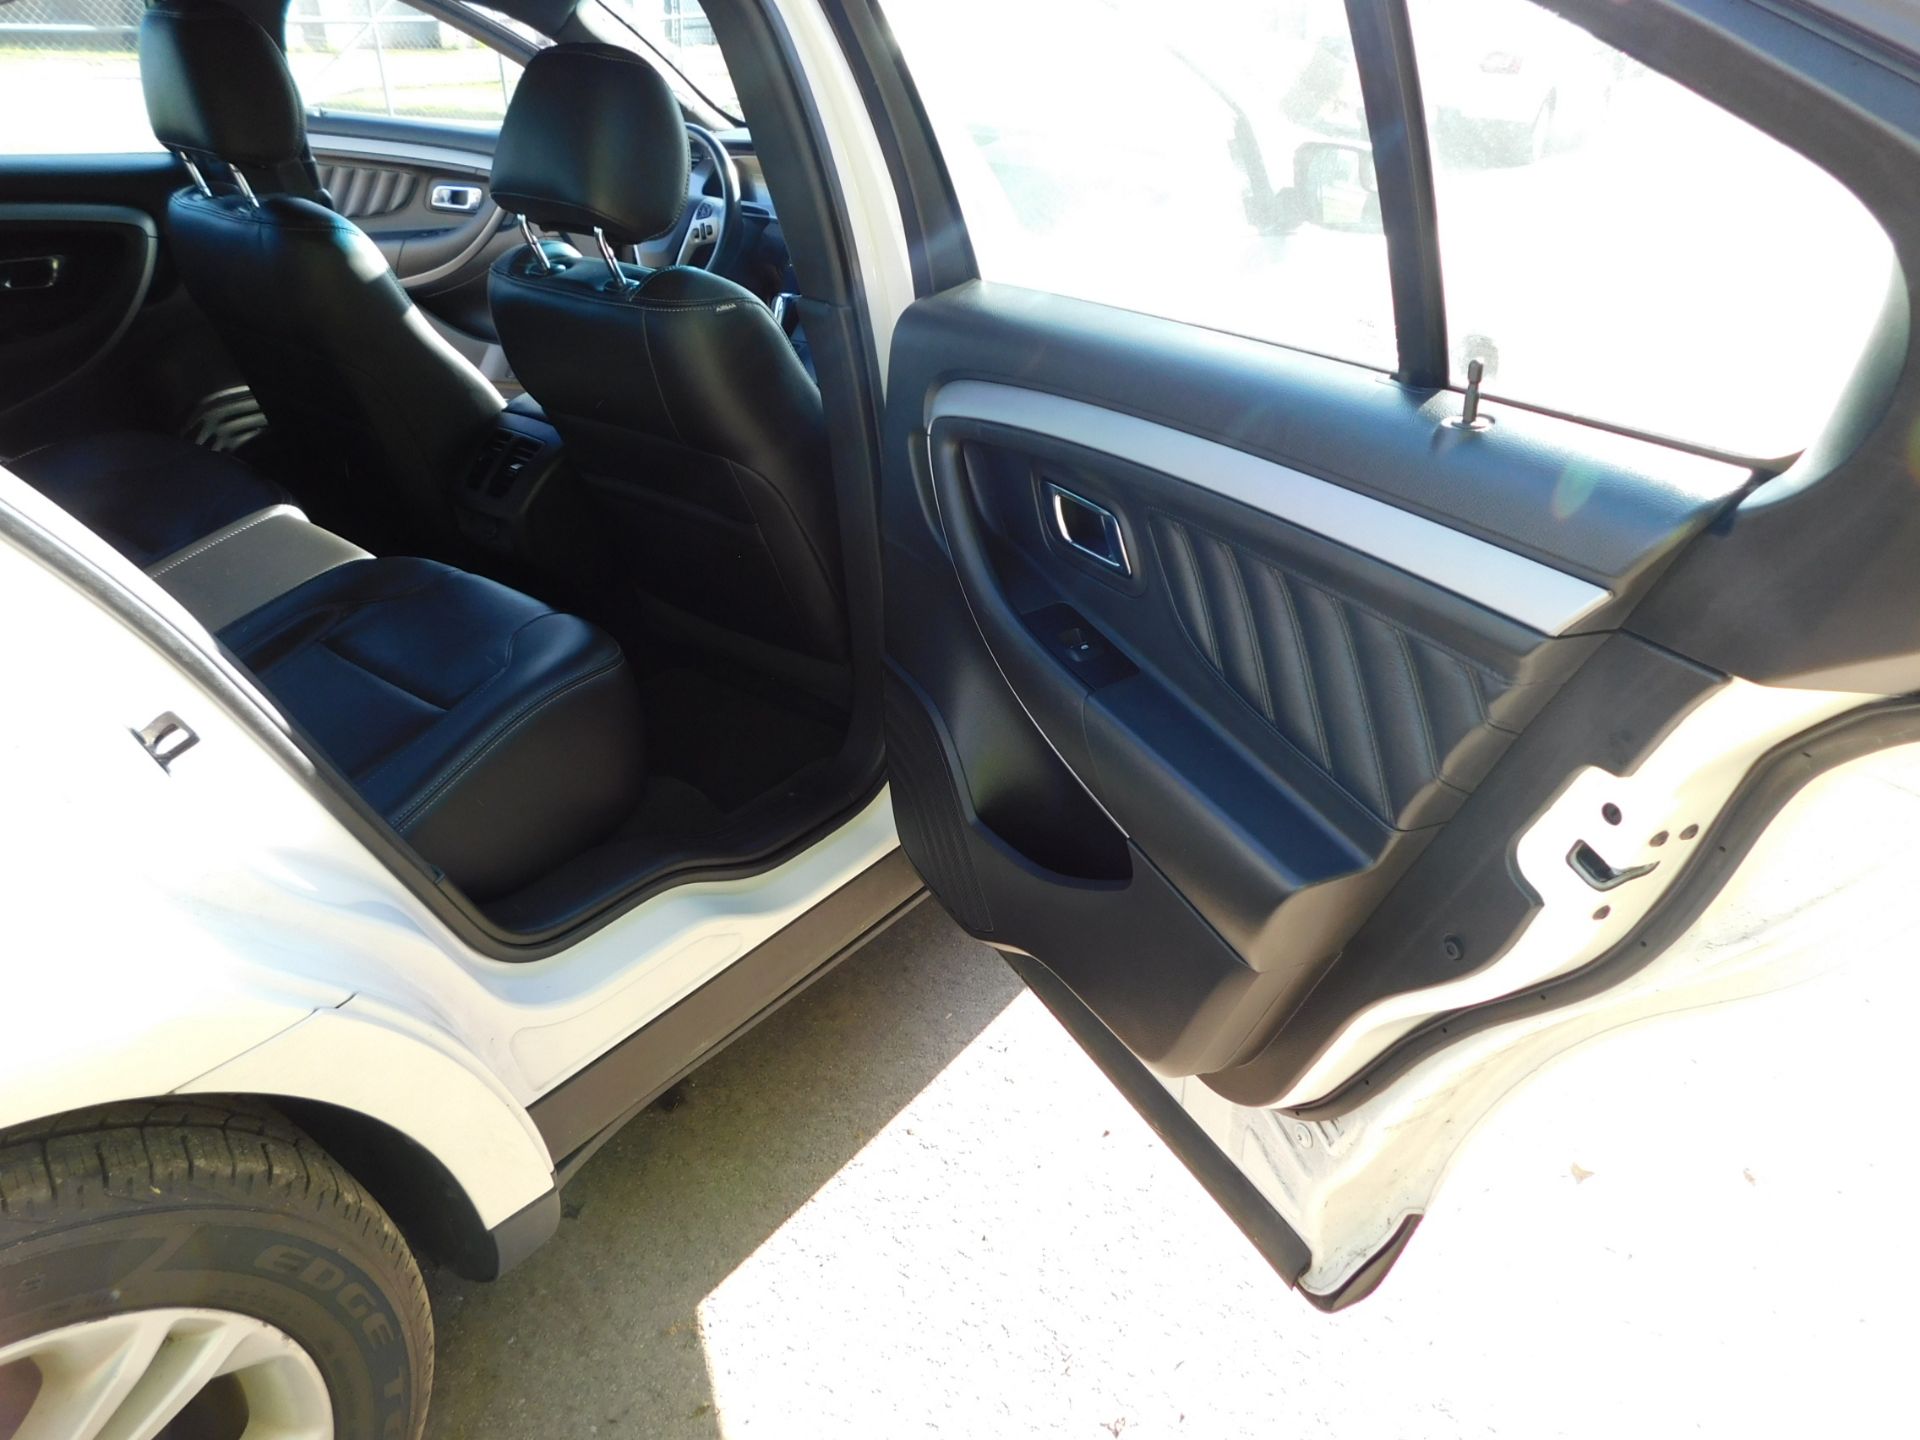 2015 Ford Taurus SEL 4-Door Sedan, vin 1FAHP2E80FG182717, Automatic Transmission, PW,PL,AC,Leather - Image 31 of 42